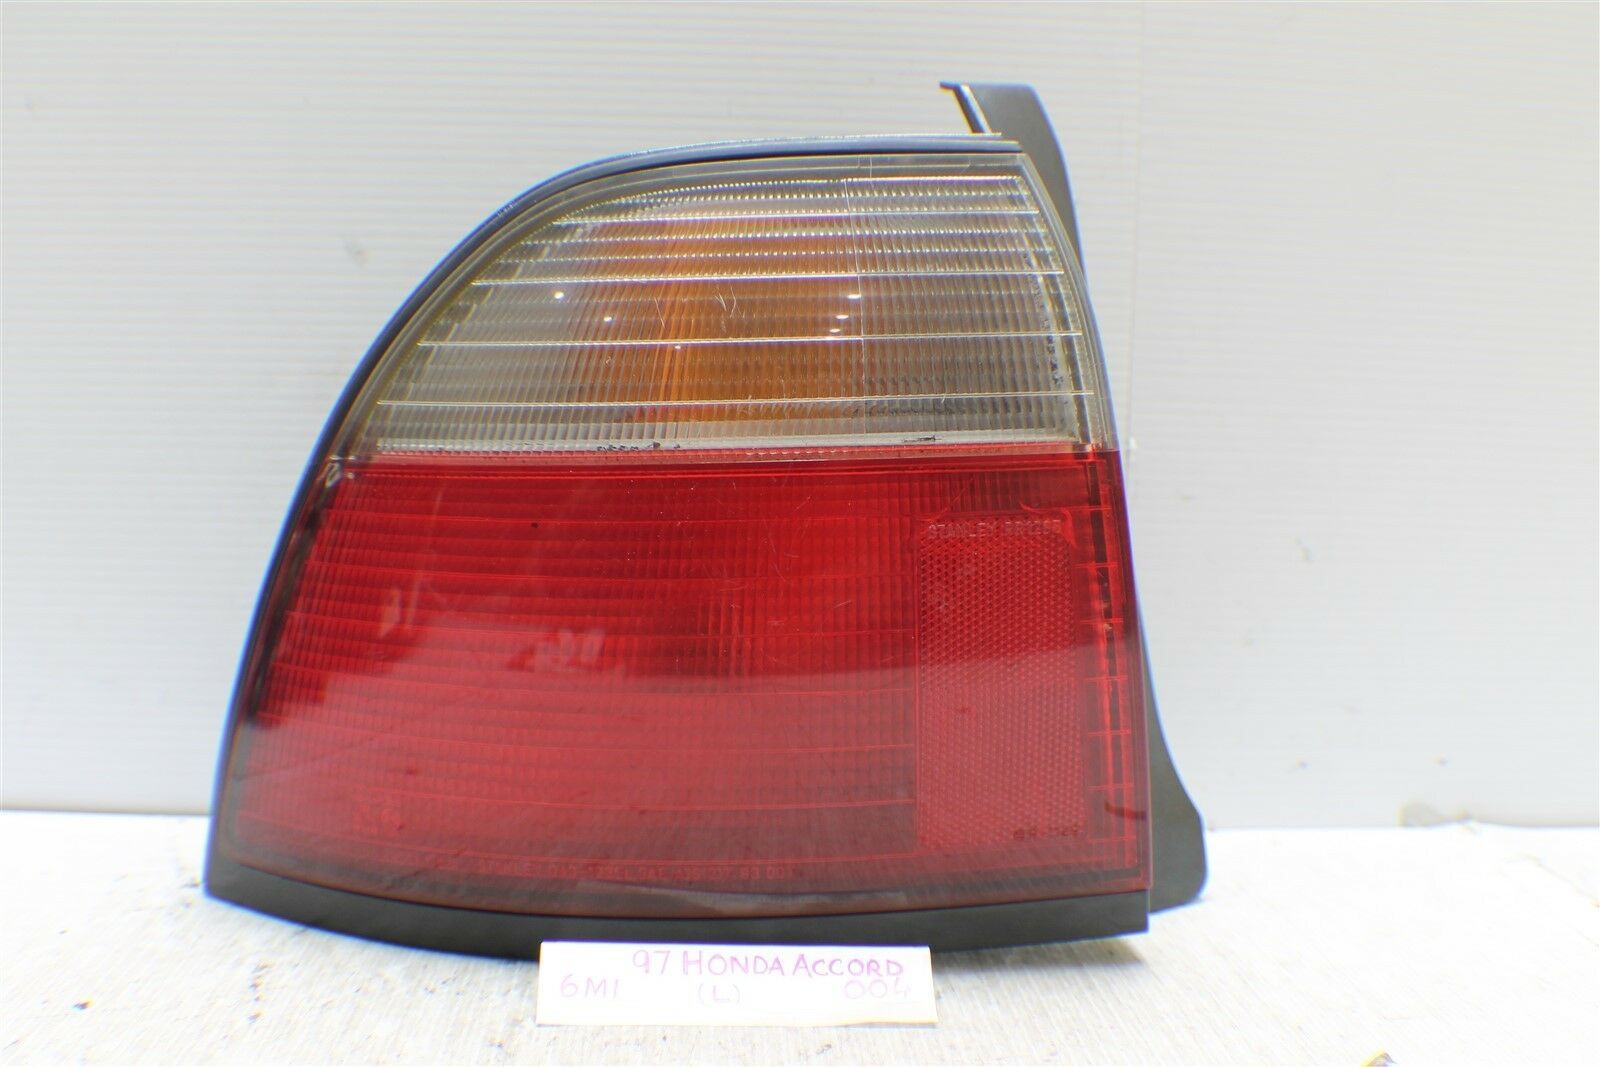 Primary image for 1996-1997 Honda Accord Coupe Sedan Left Driver Genuine OEM tail light 04 6M1